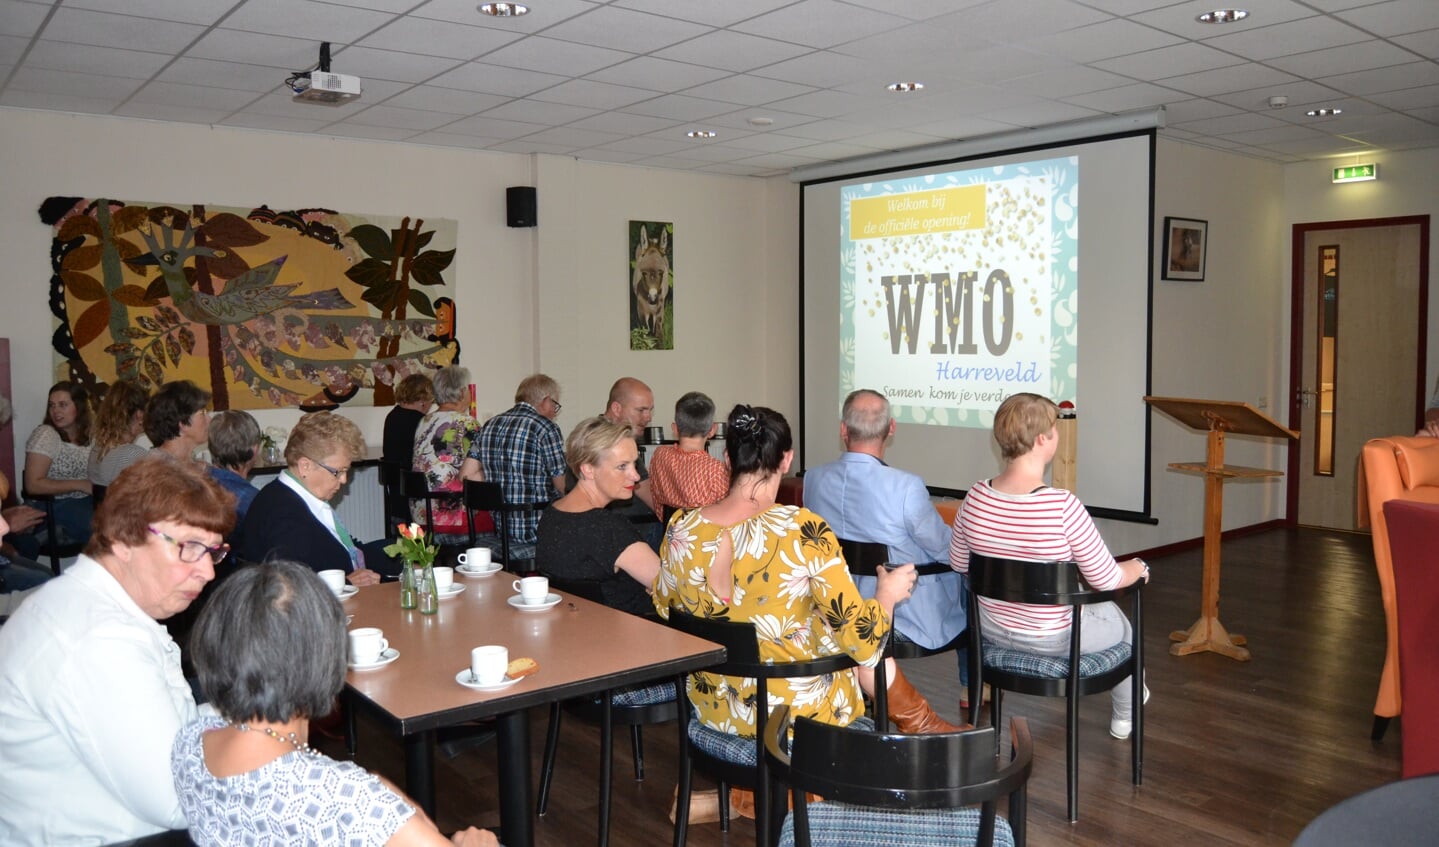 Volle zaal in dorpshuis 't Kempken bij opening WMO Harreveld. Foto: Karin Stronks